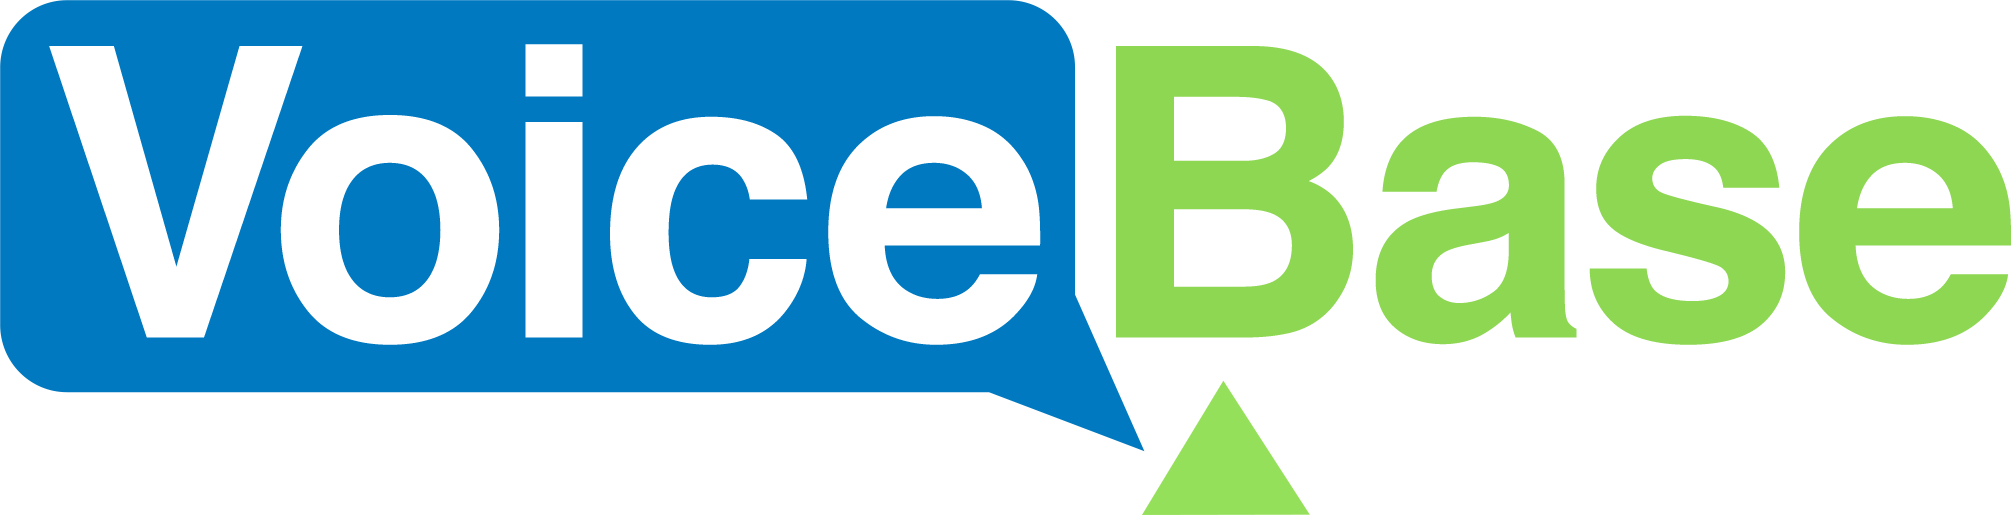 voicebase-logo-2 (2)